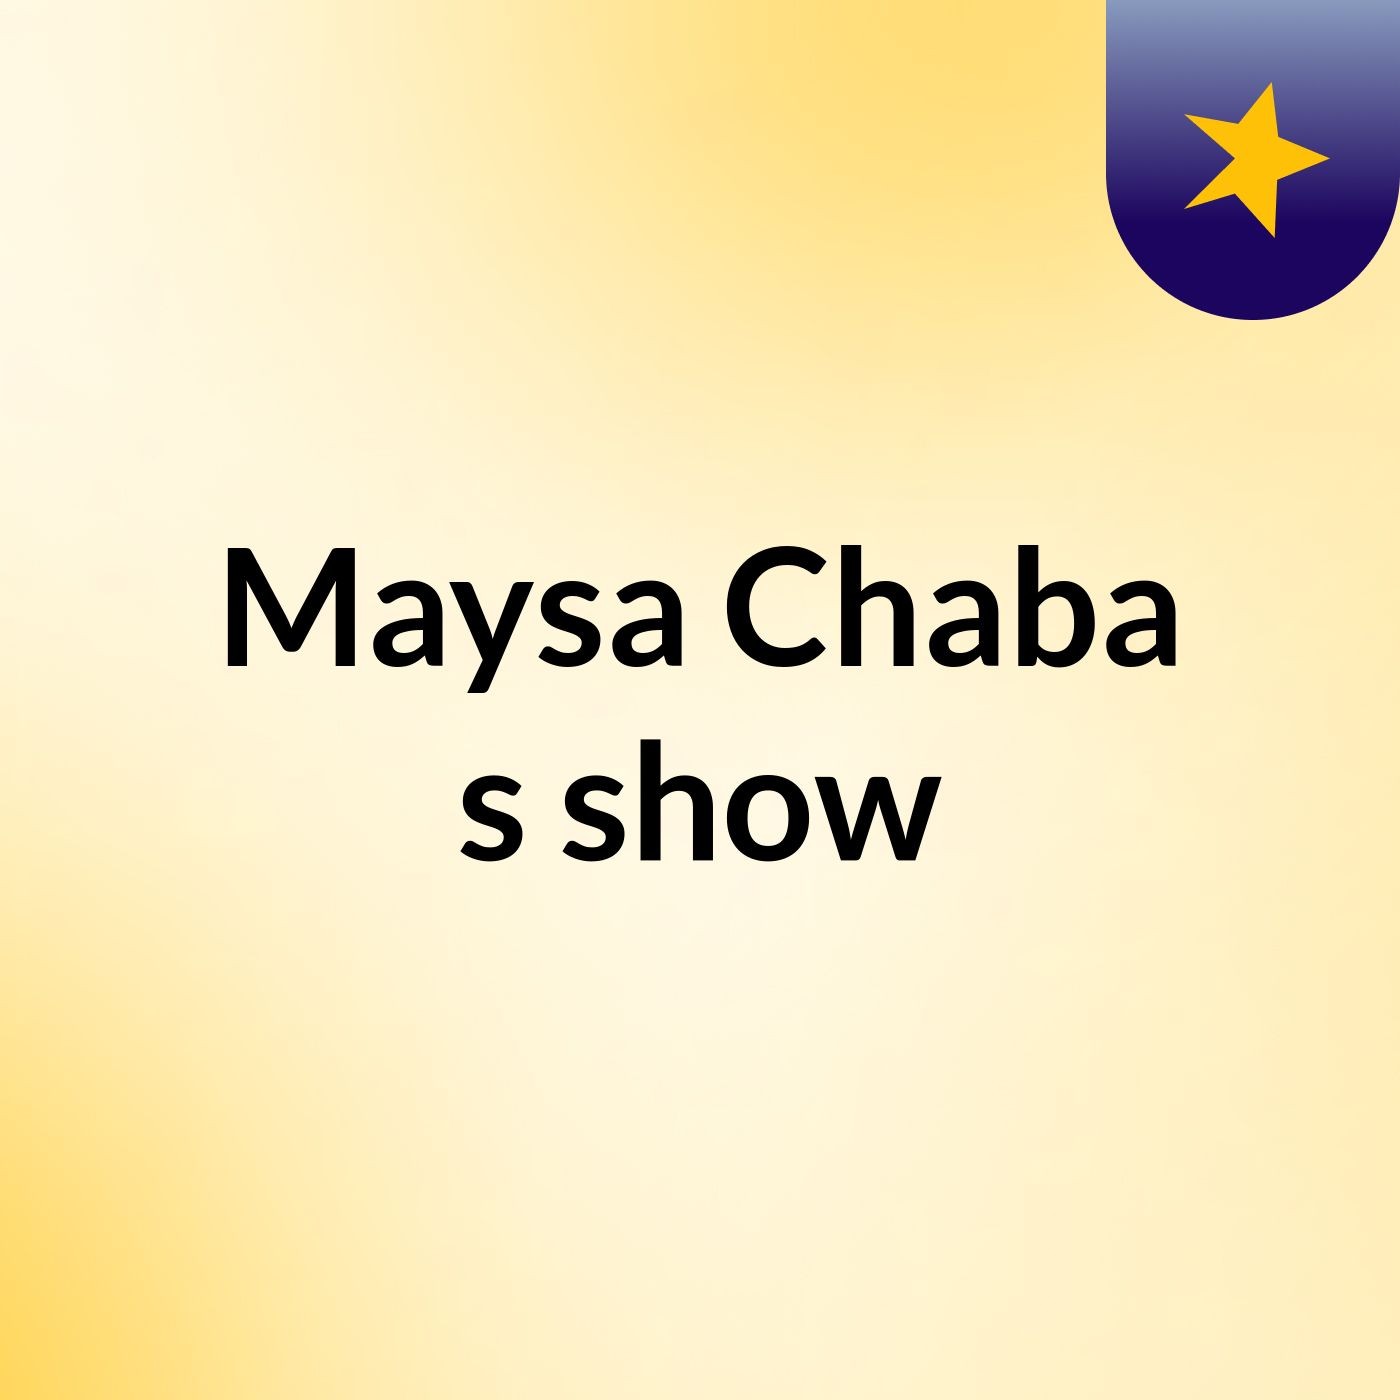 Maysa Chaba's show